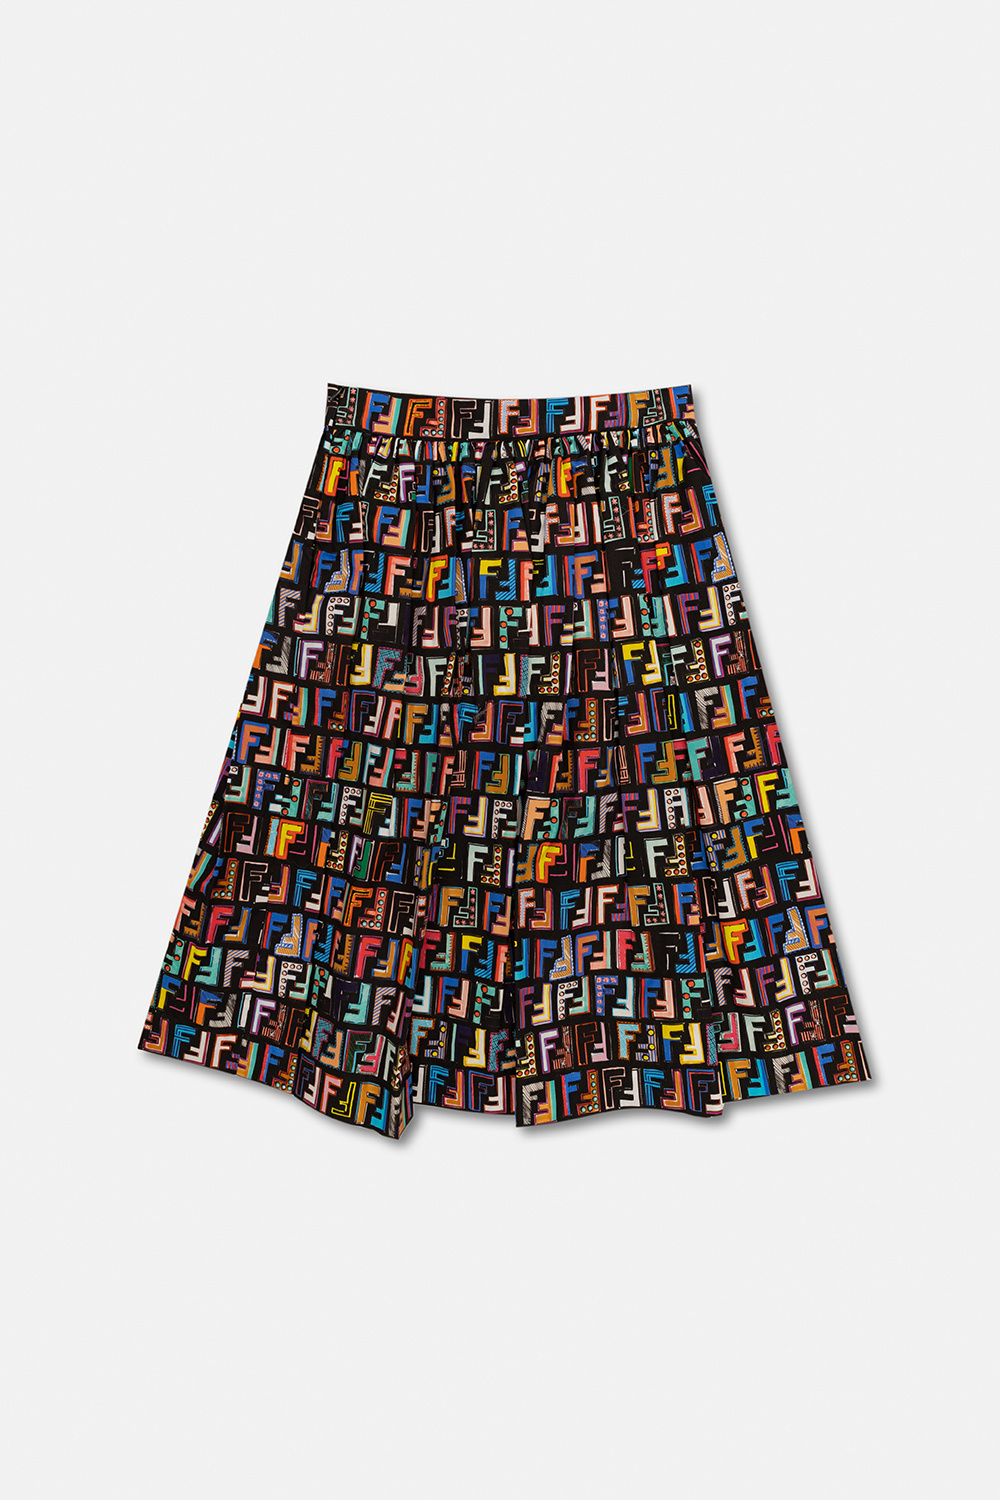 fendi Small Kids Skirt with logo